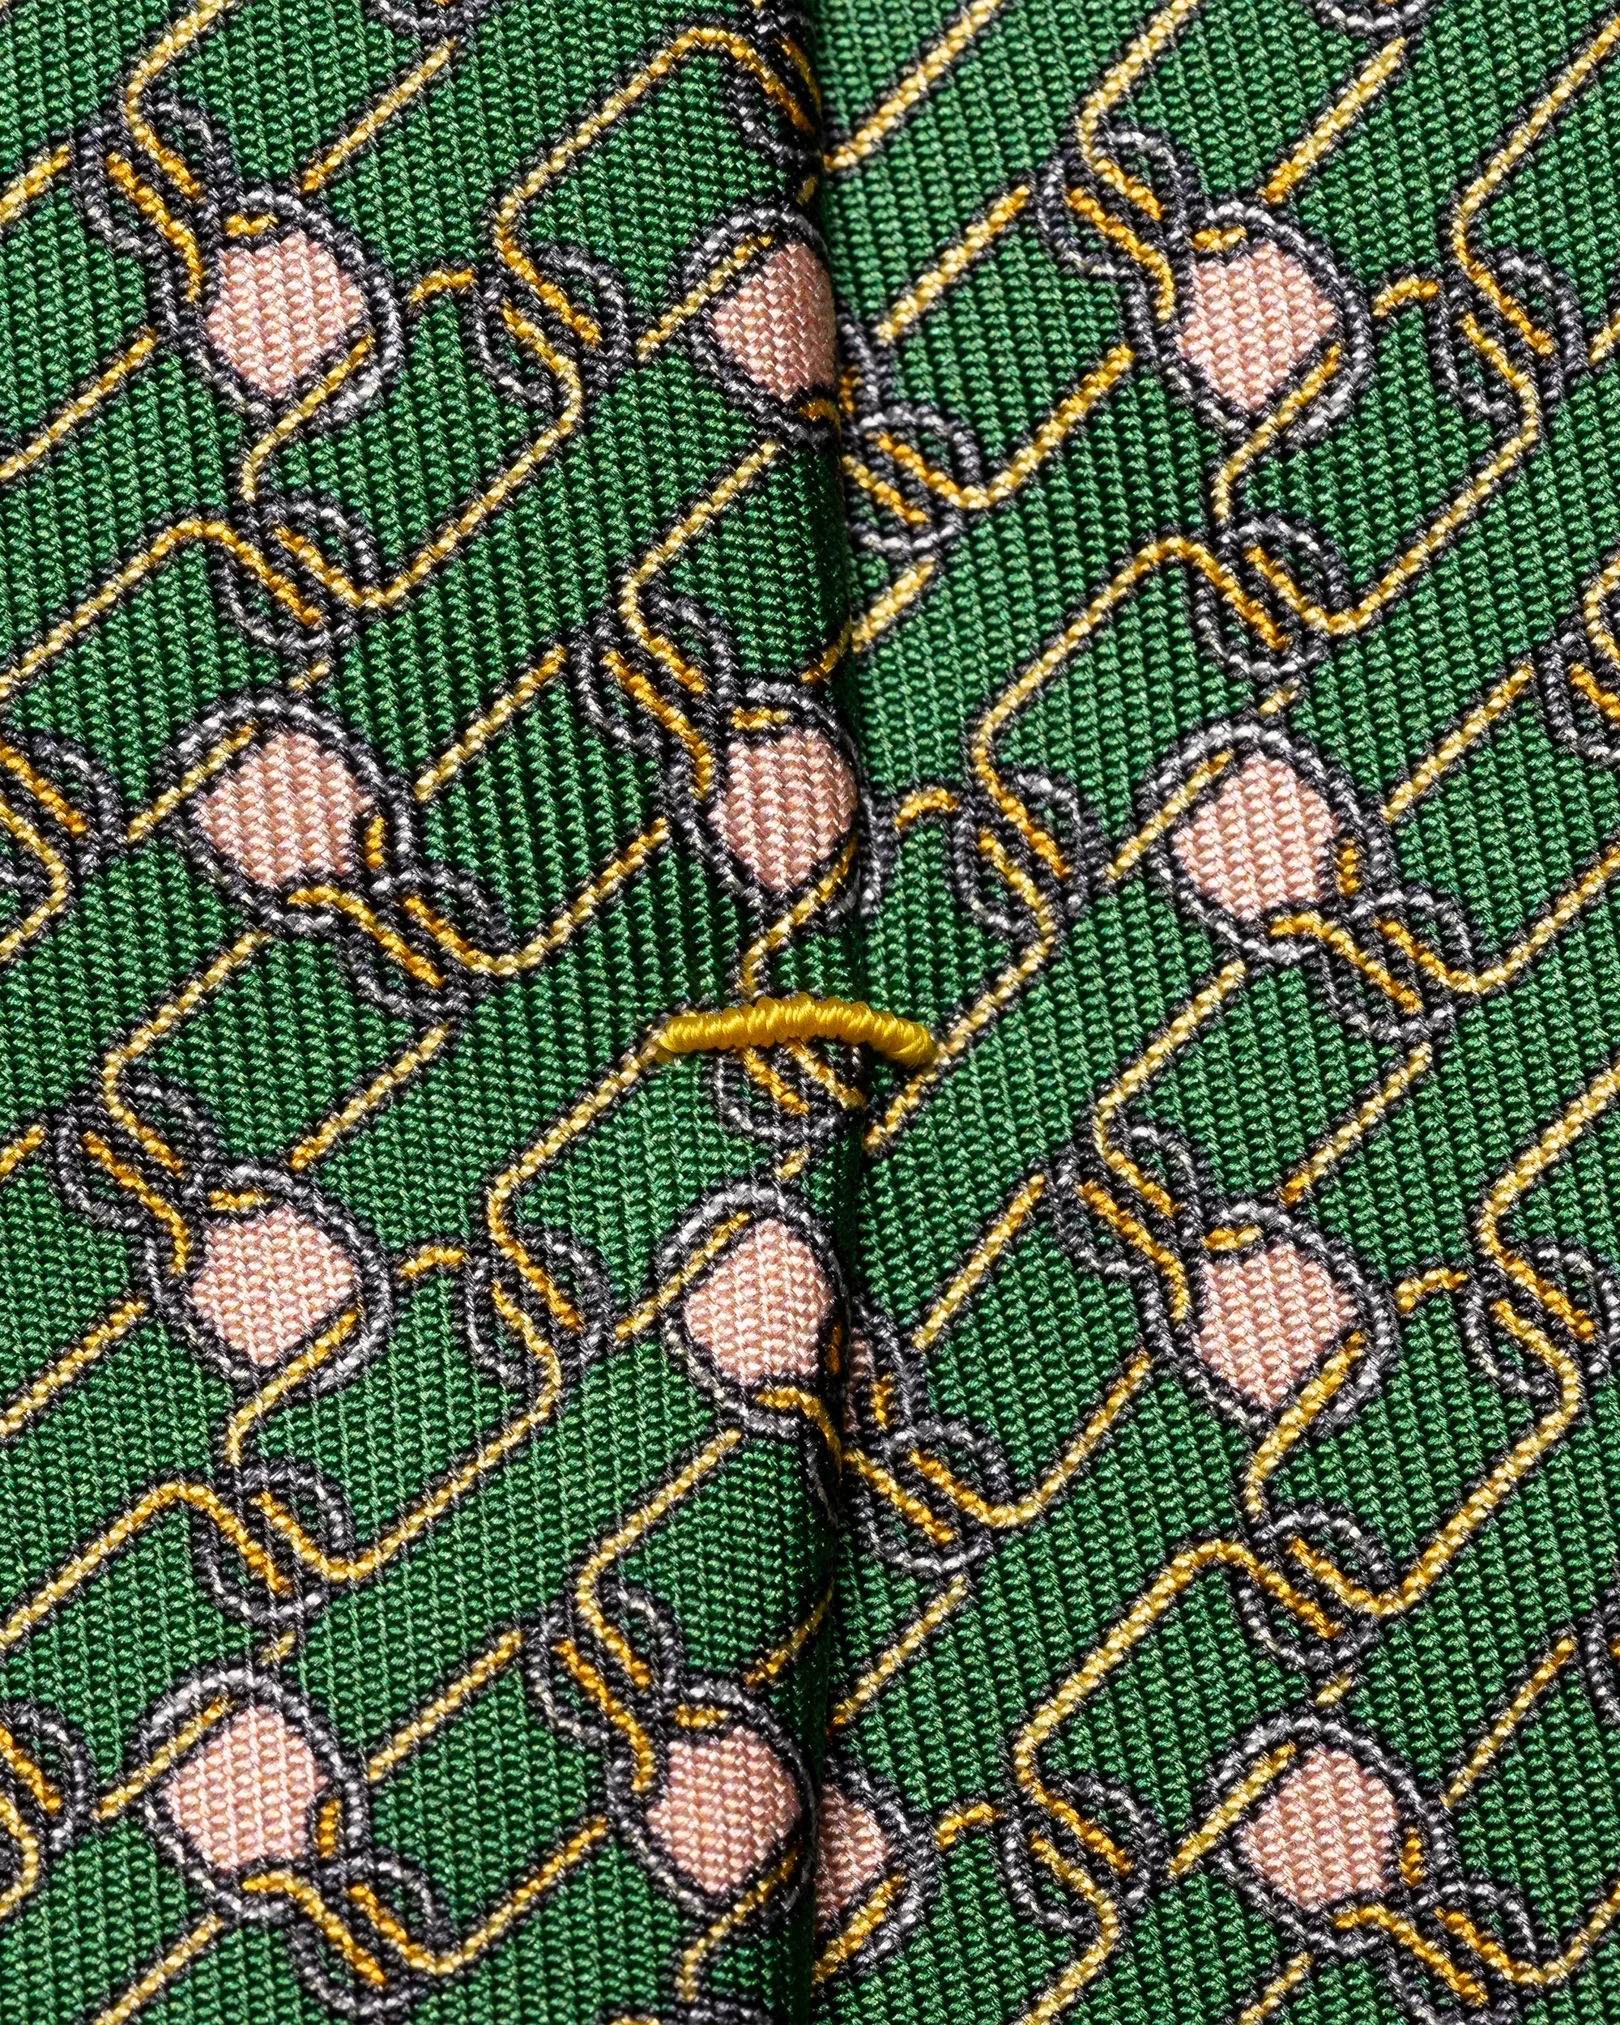 Eton - Geometric Print Silk Tie